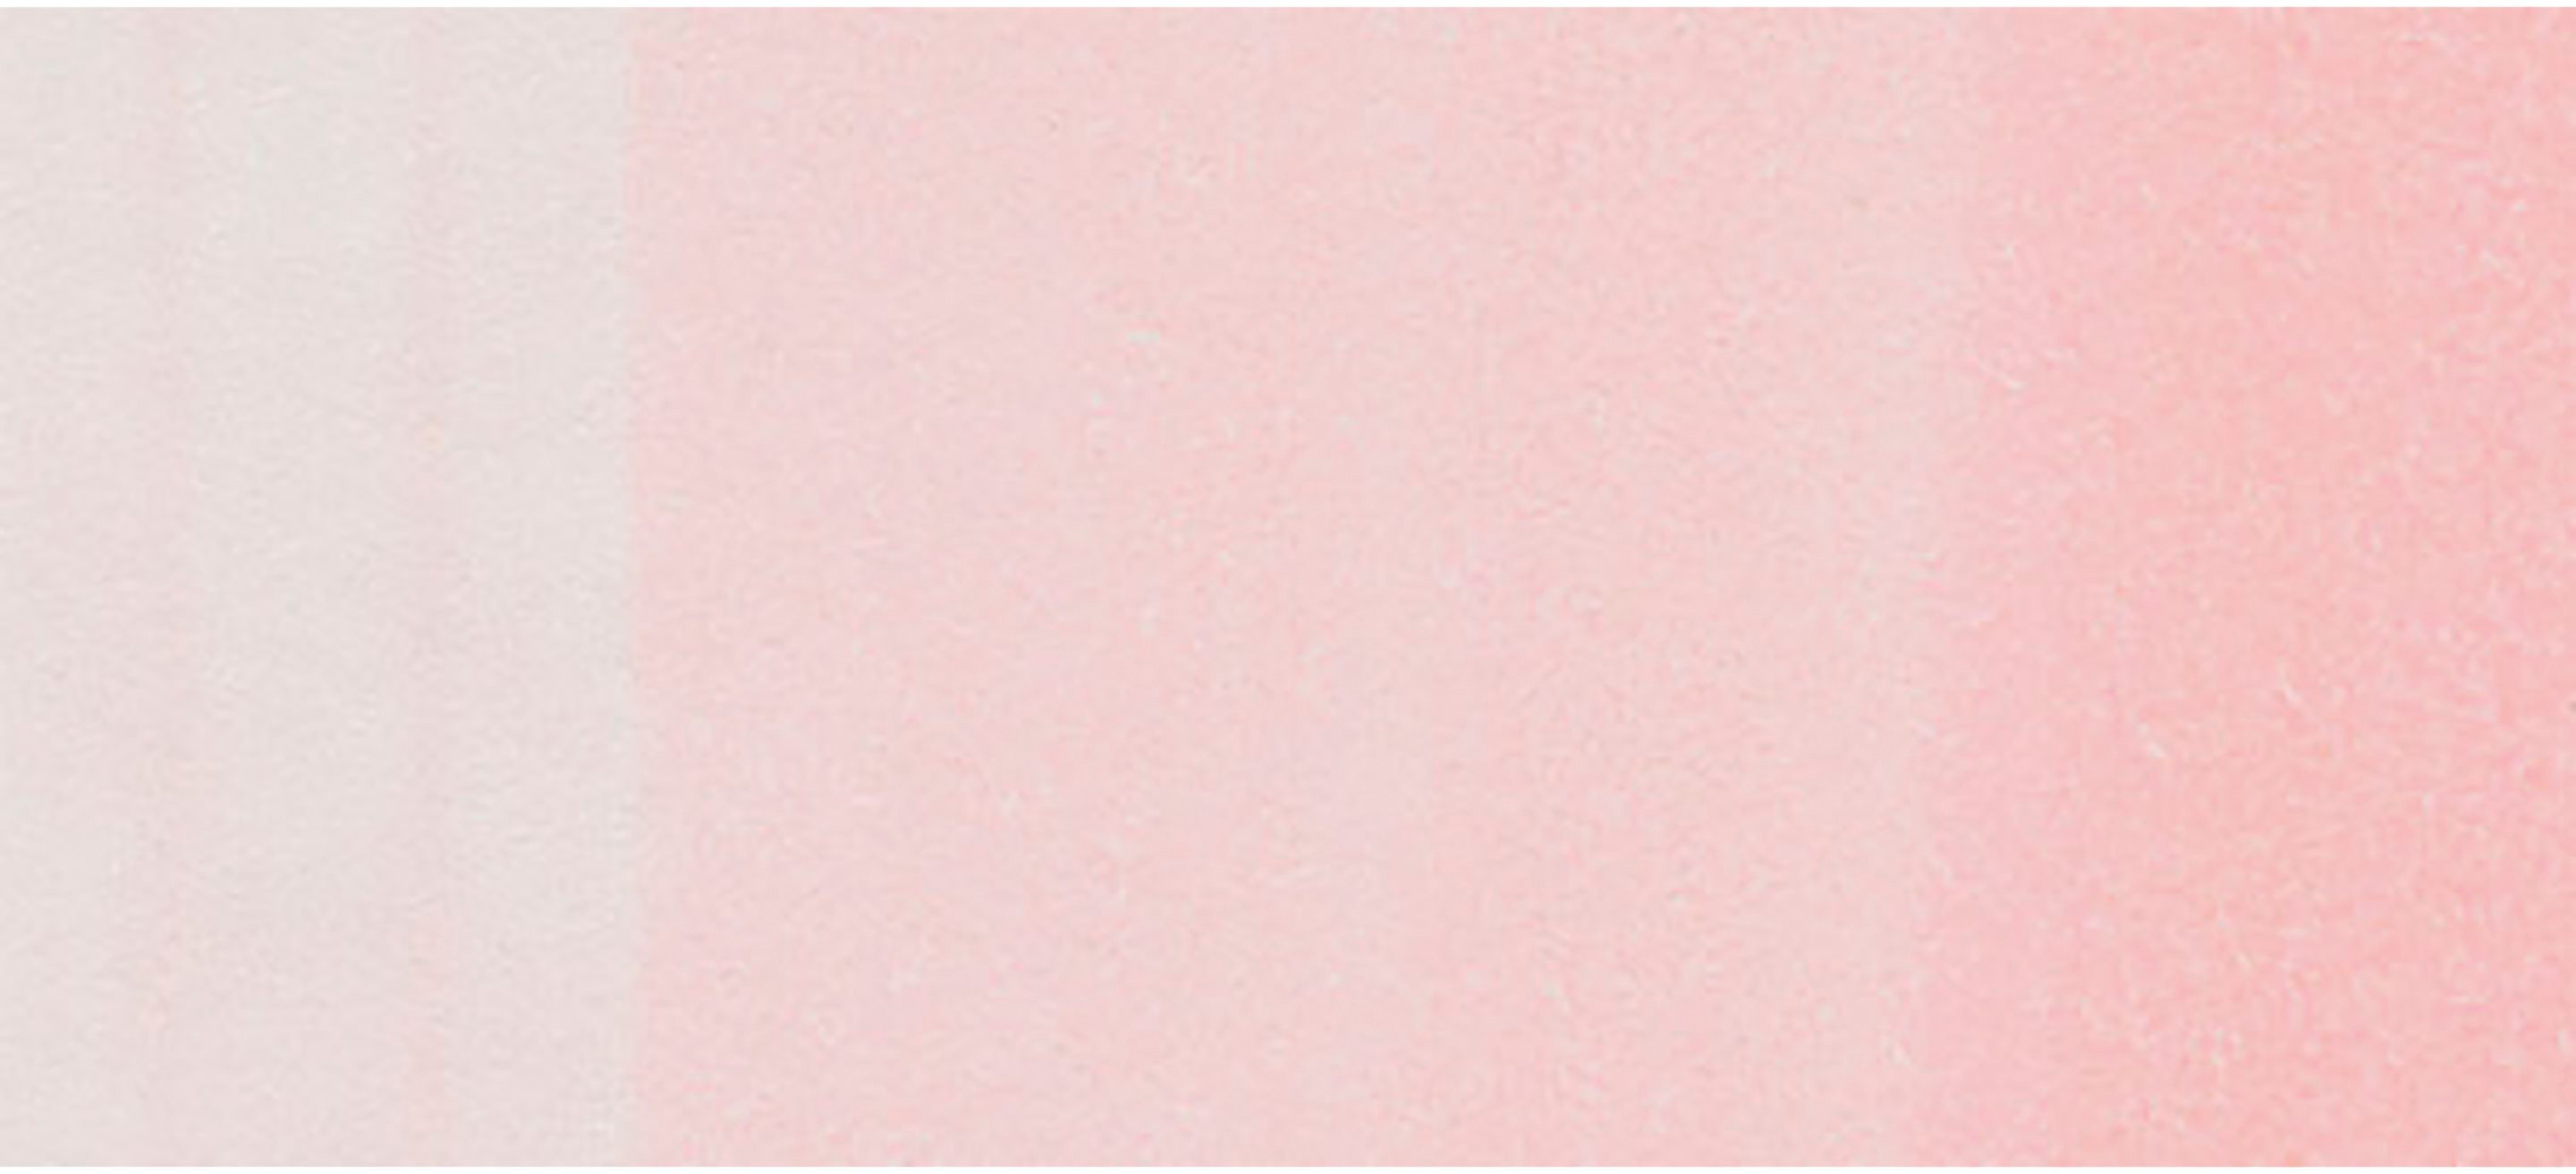 COPIC Marker Sketch 21075177 RV10 - Pale Pink